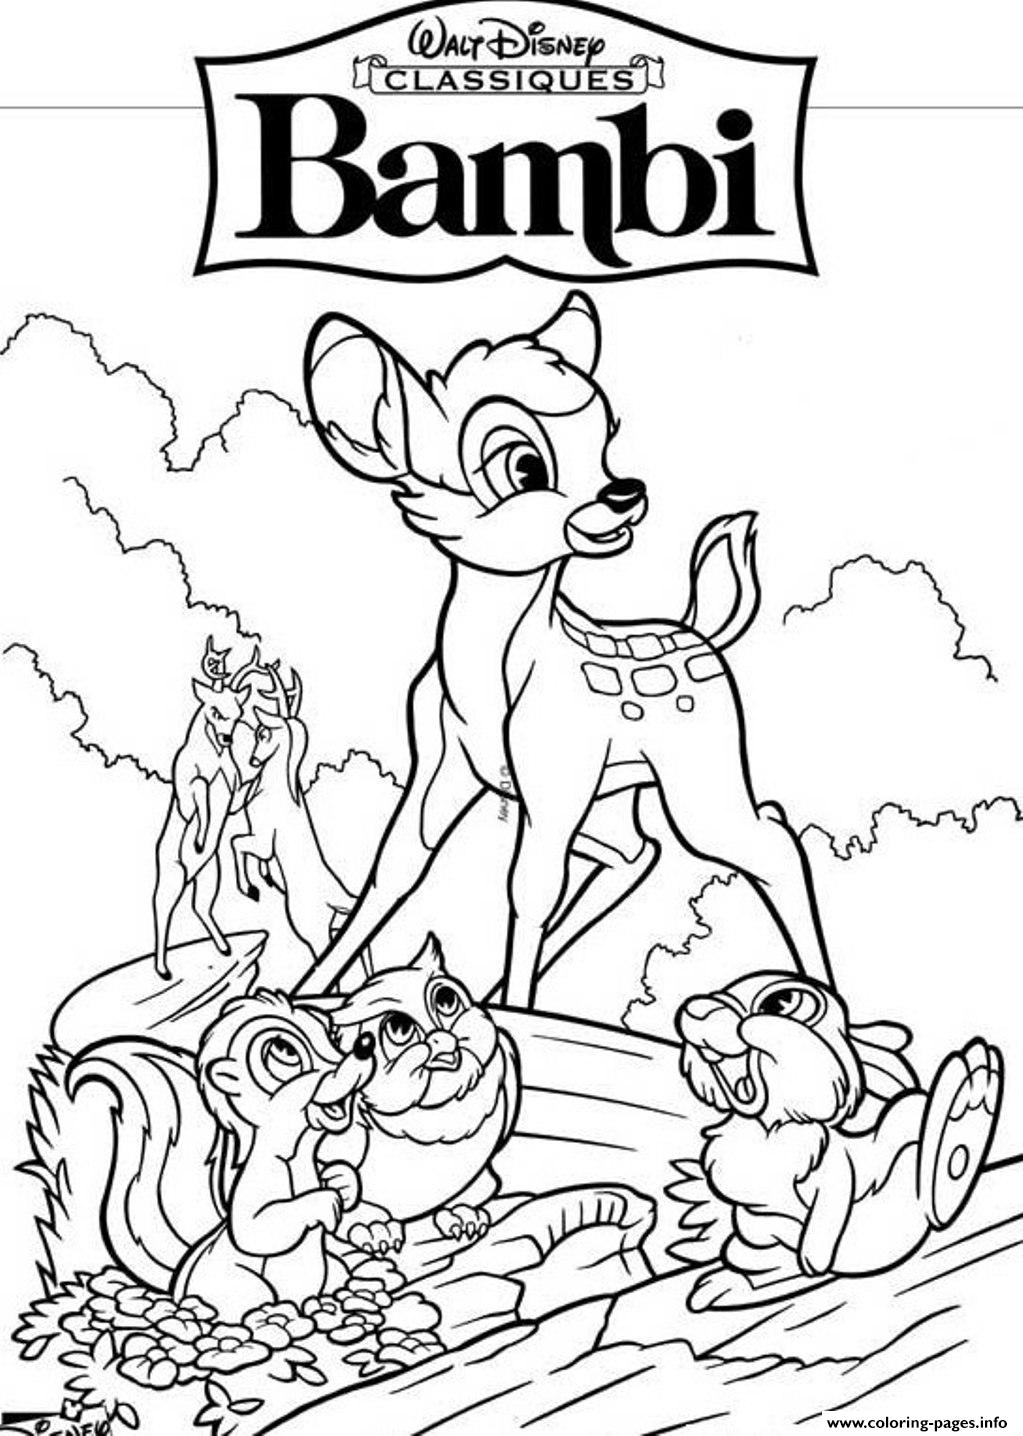 Disney Bambi 7549 coloring